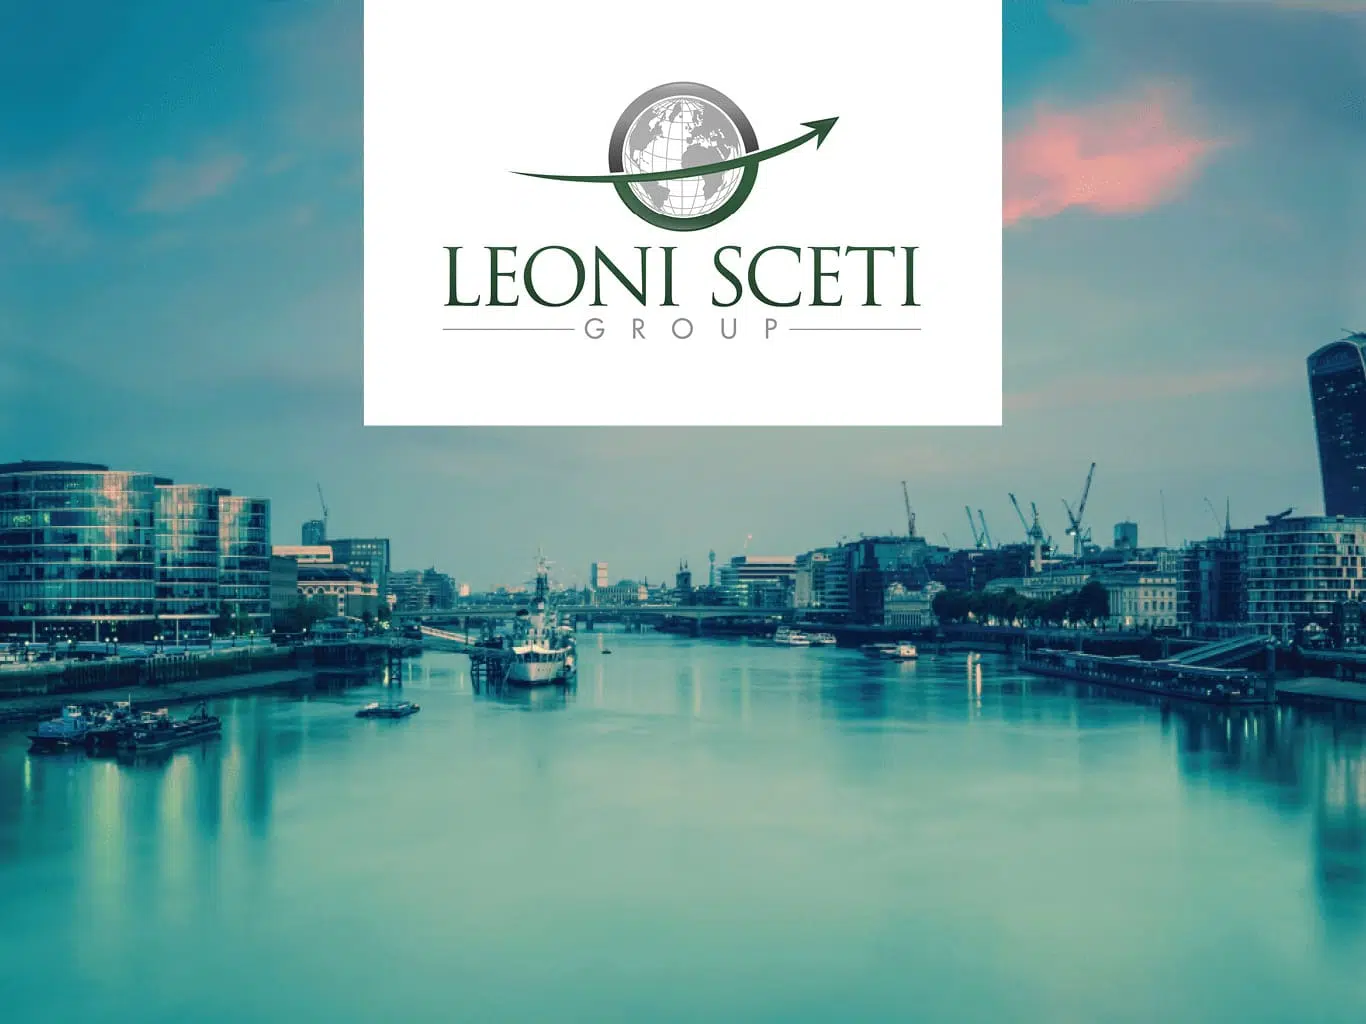 Leoni Sceti Group